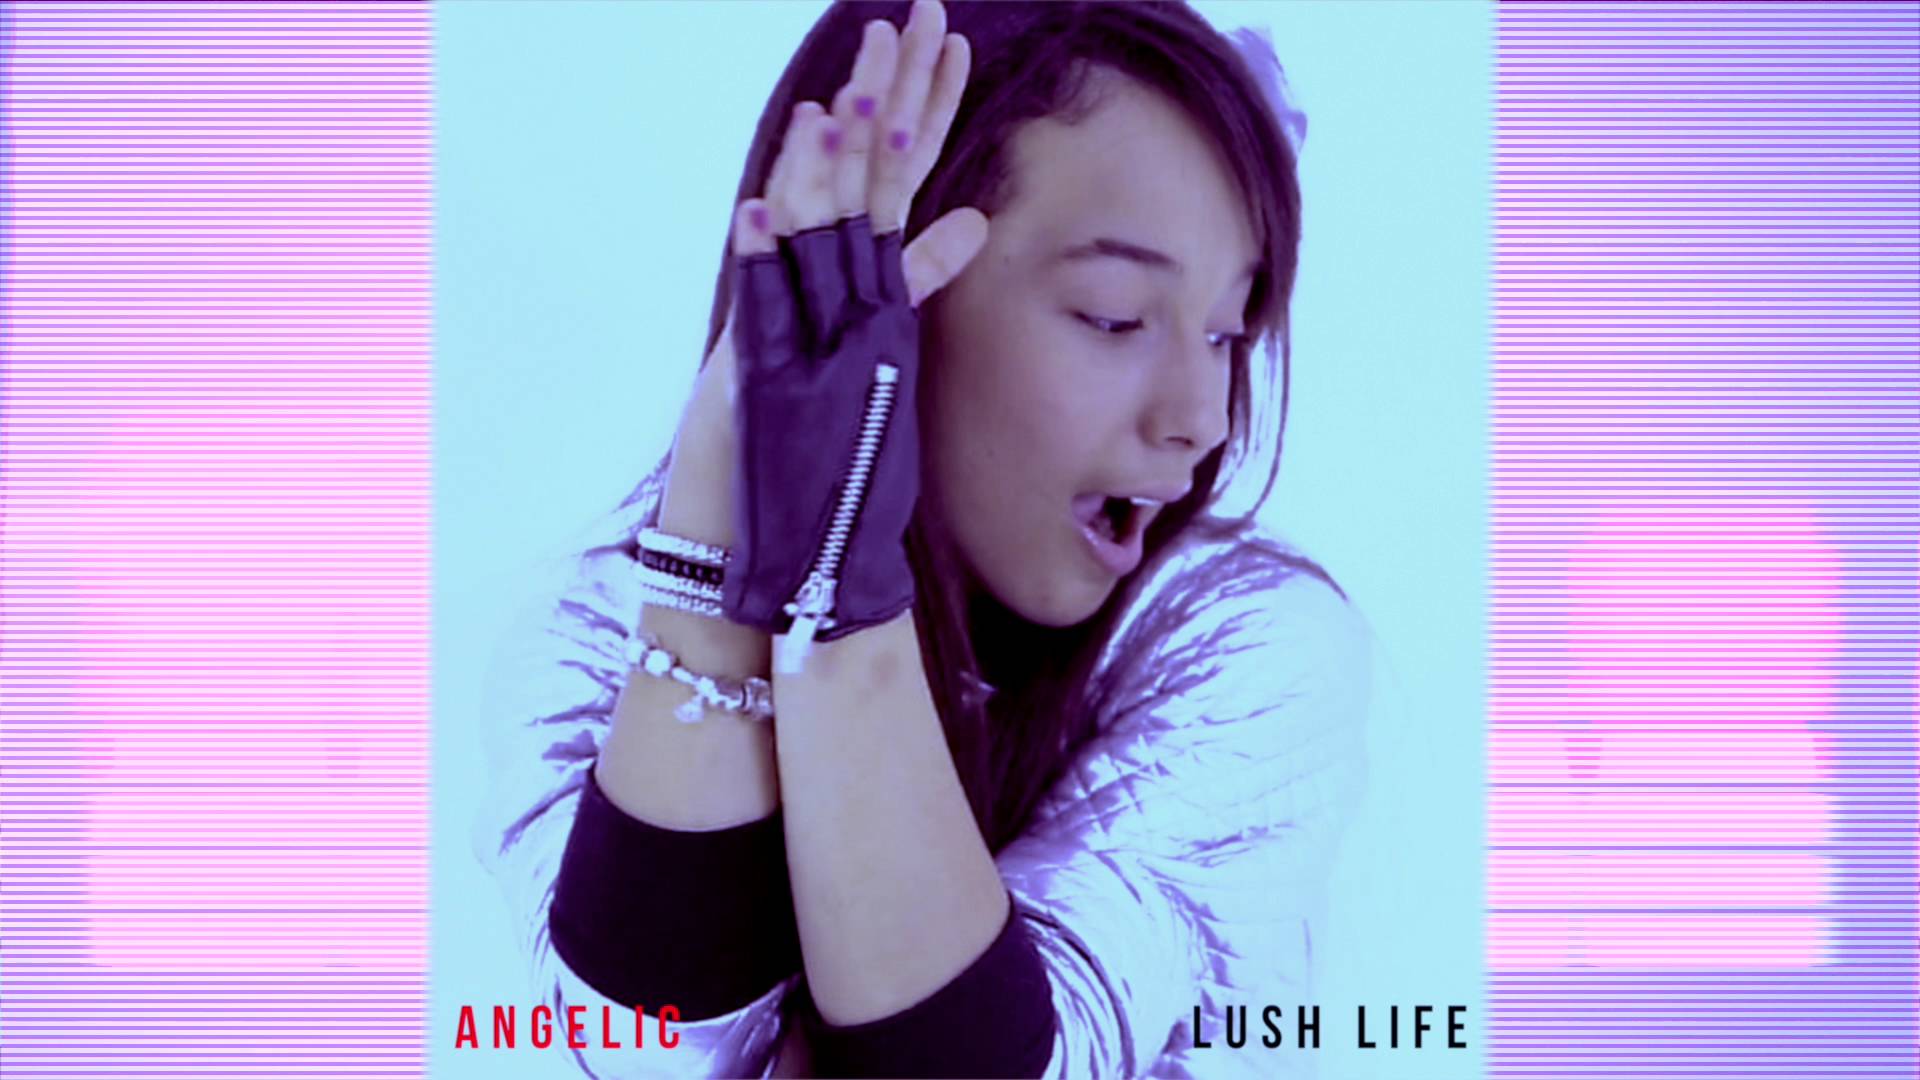 Lush Life - Zara Larsson (Angelic cover) (Audio) - YouTube